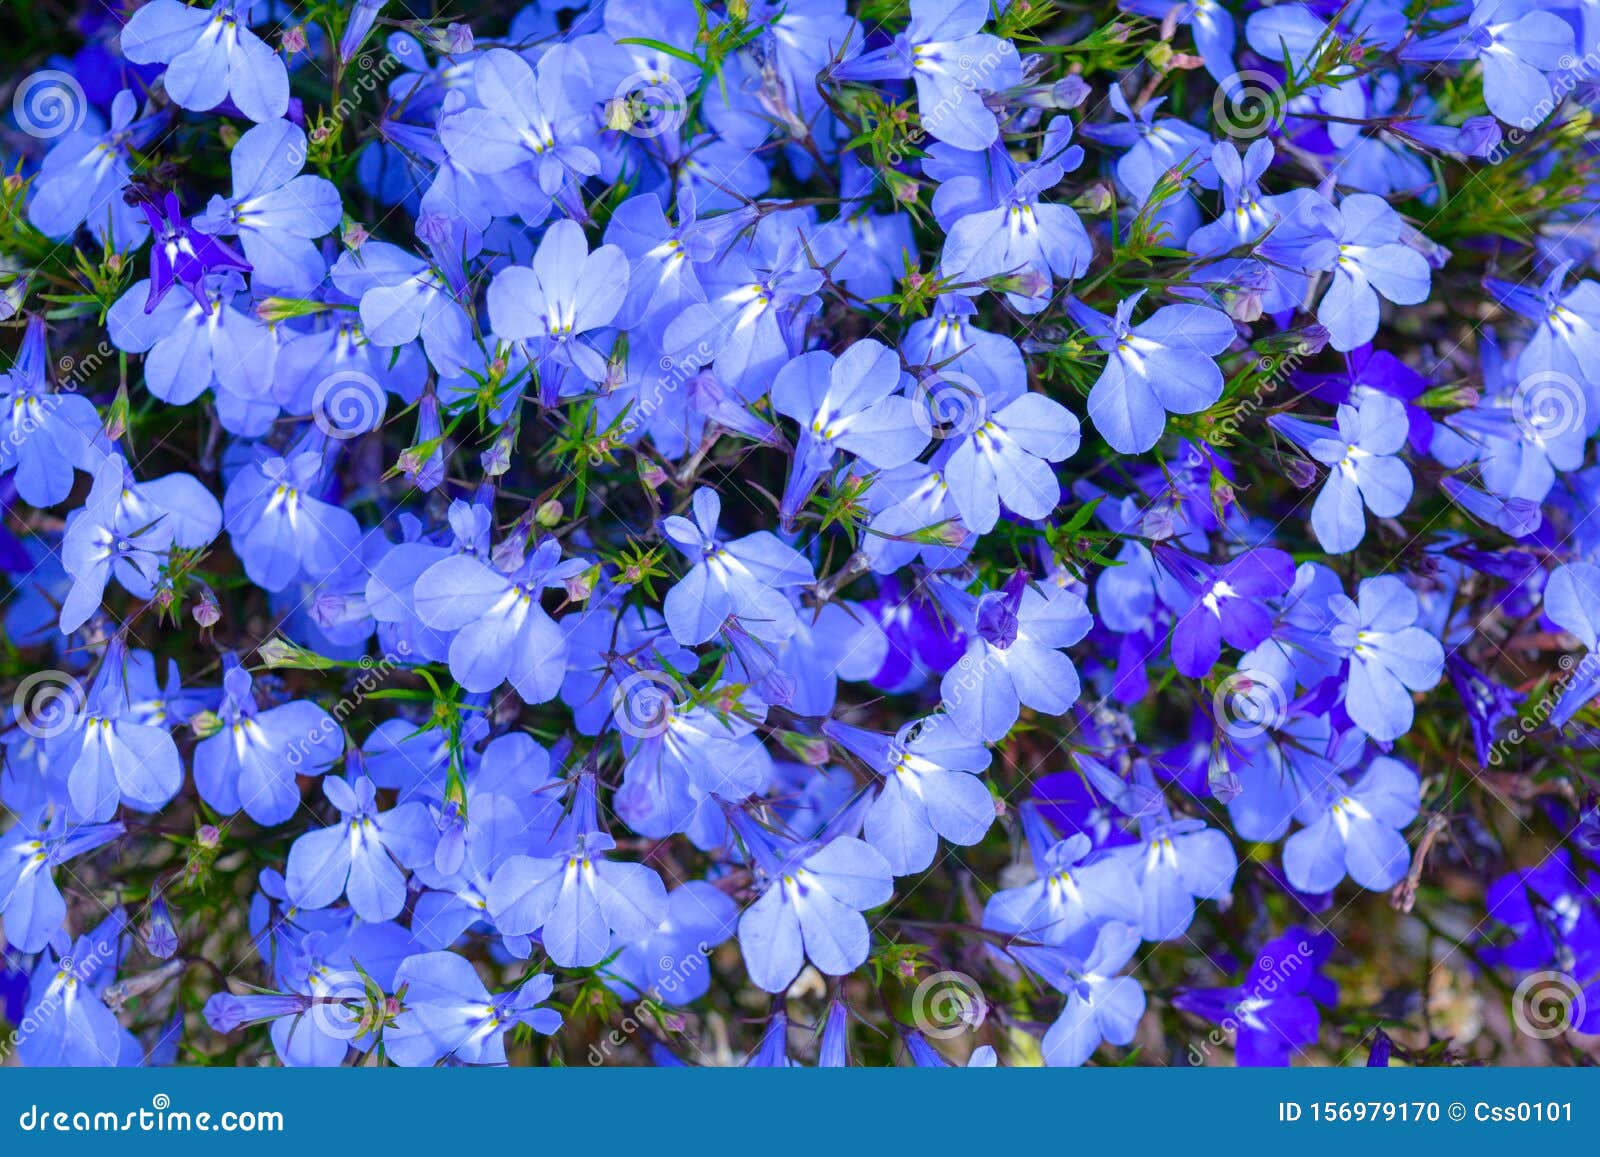 Beautiful Garden Blue Flowers Carpets Covering Ground. Blue Field ...